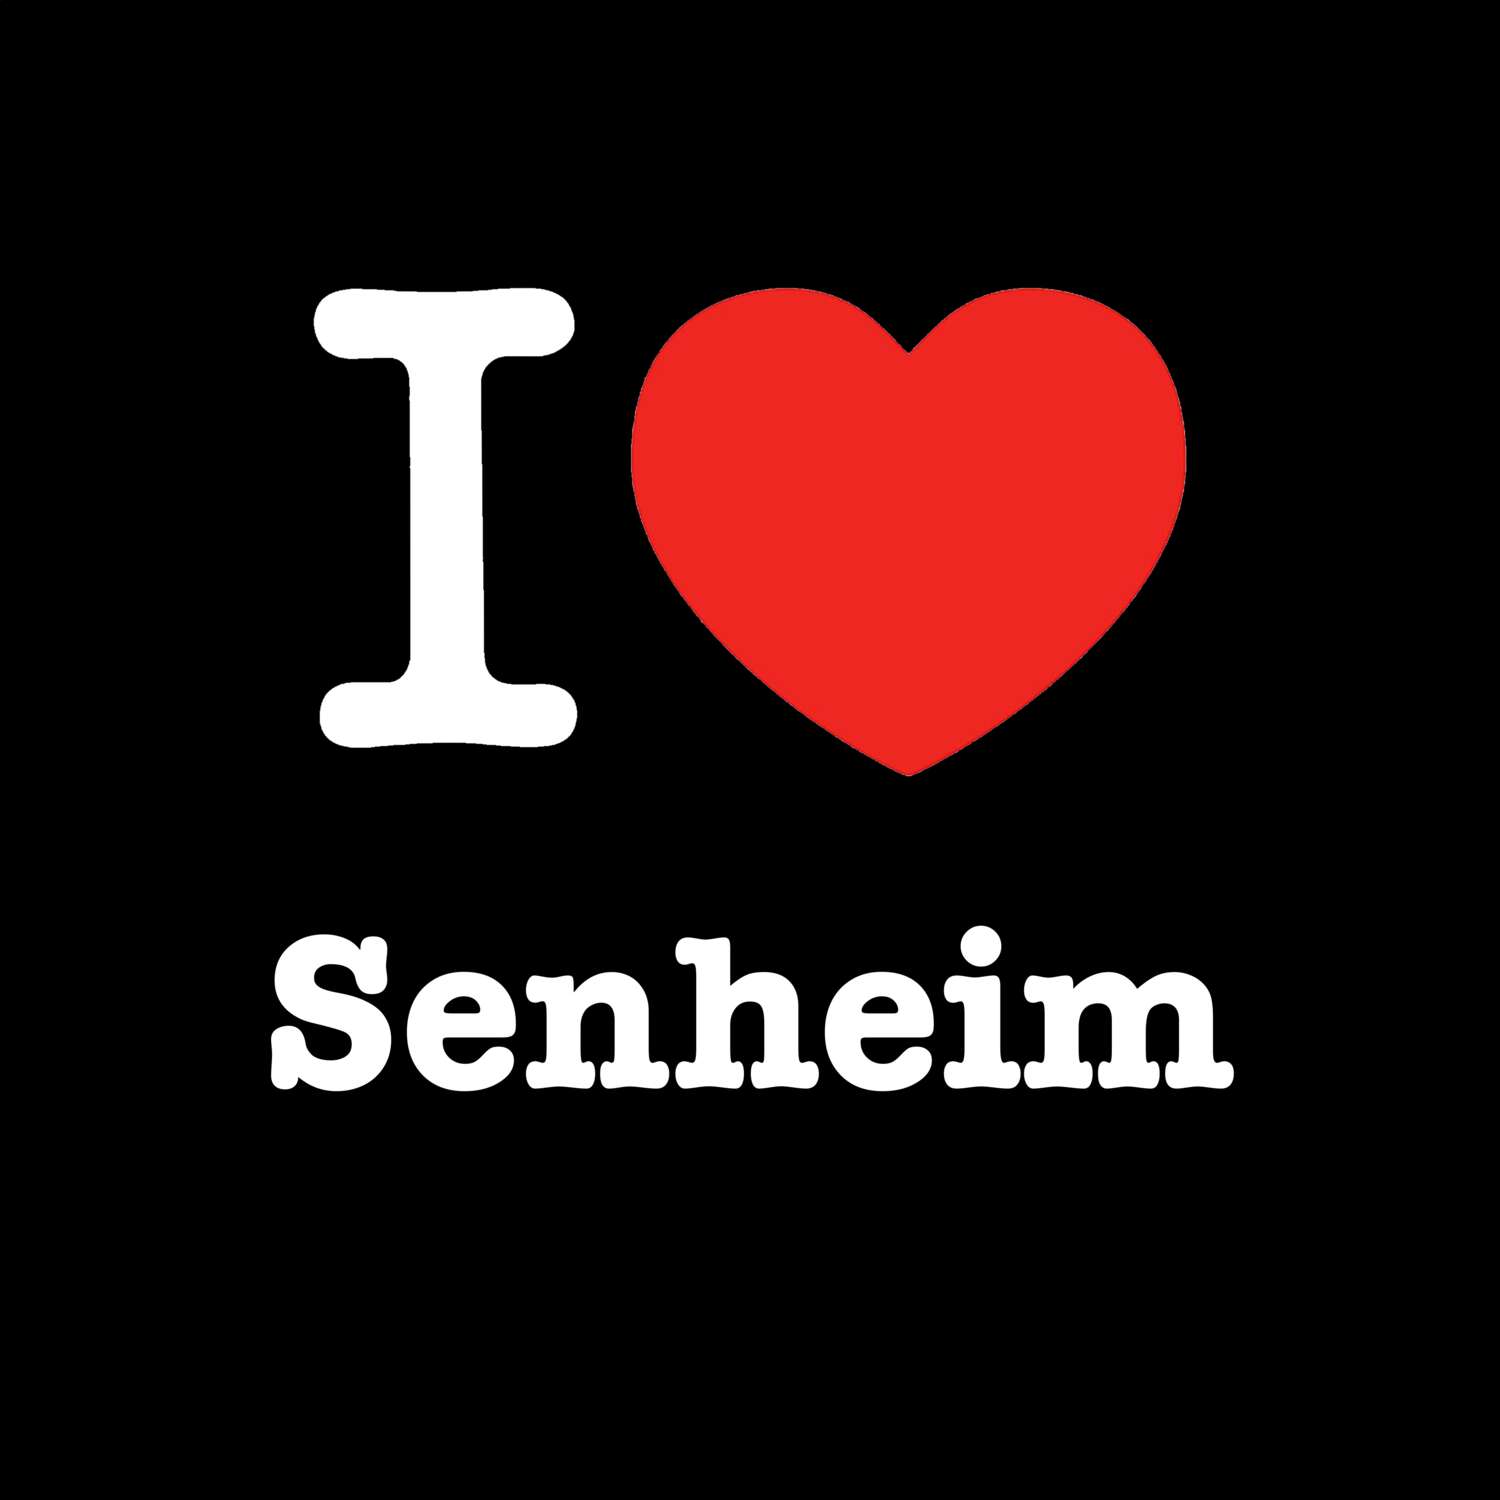 Senheim T-Shirt »I love«